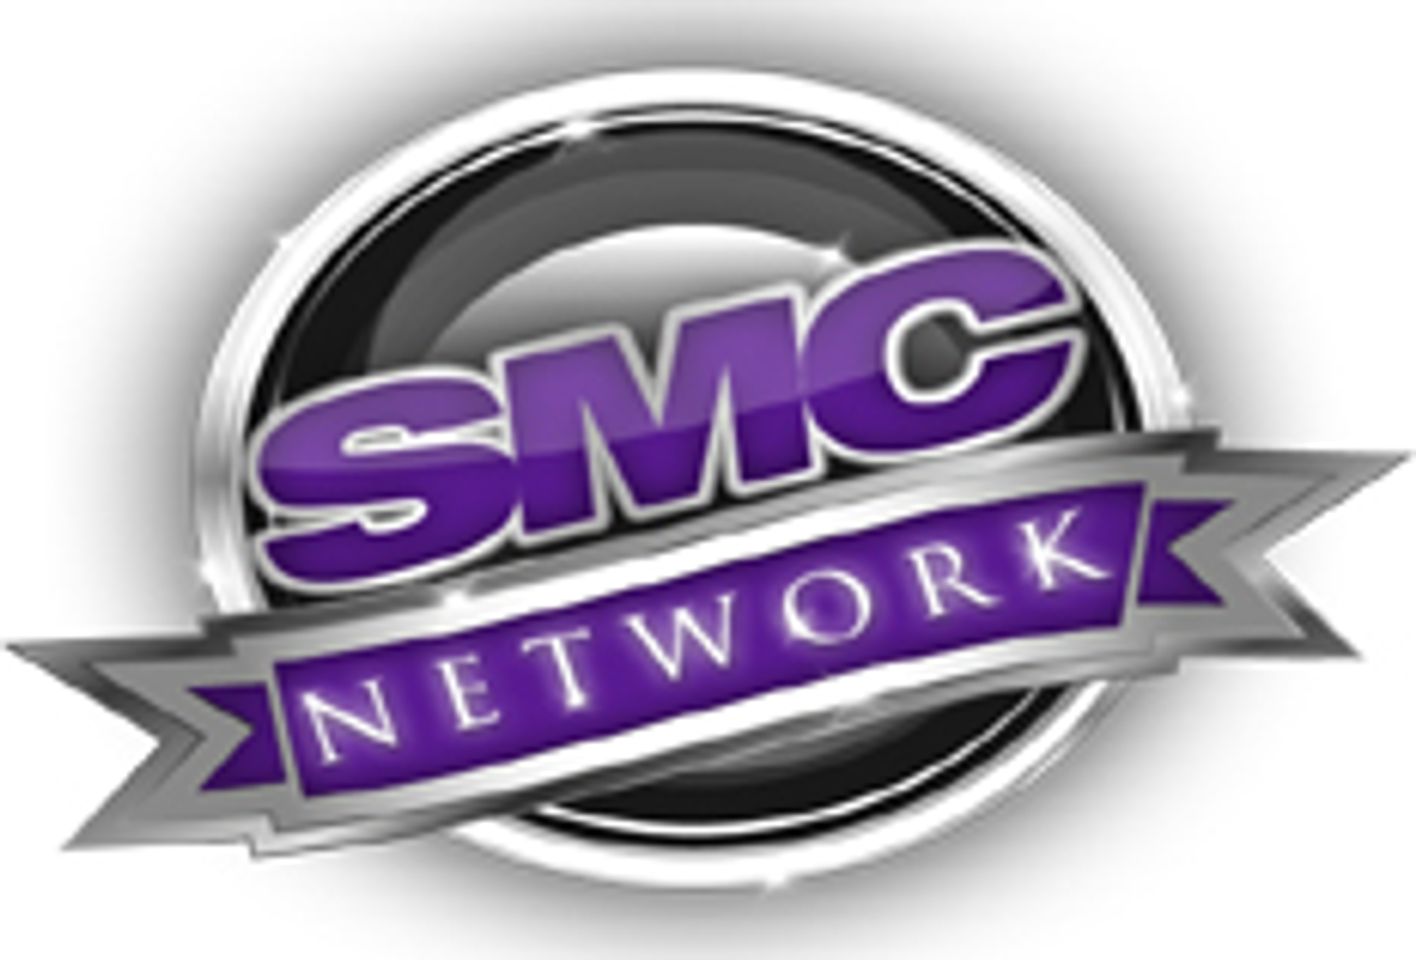 SMC Productions Launches SMCNetwork